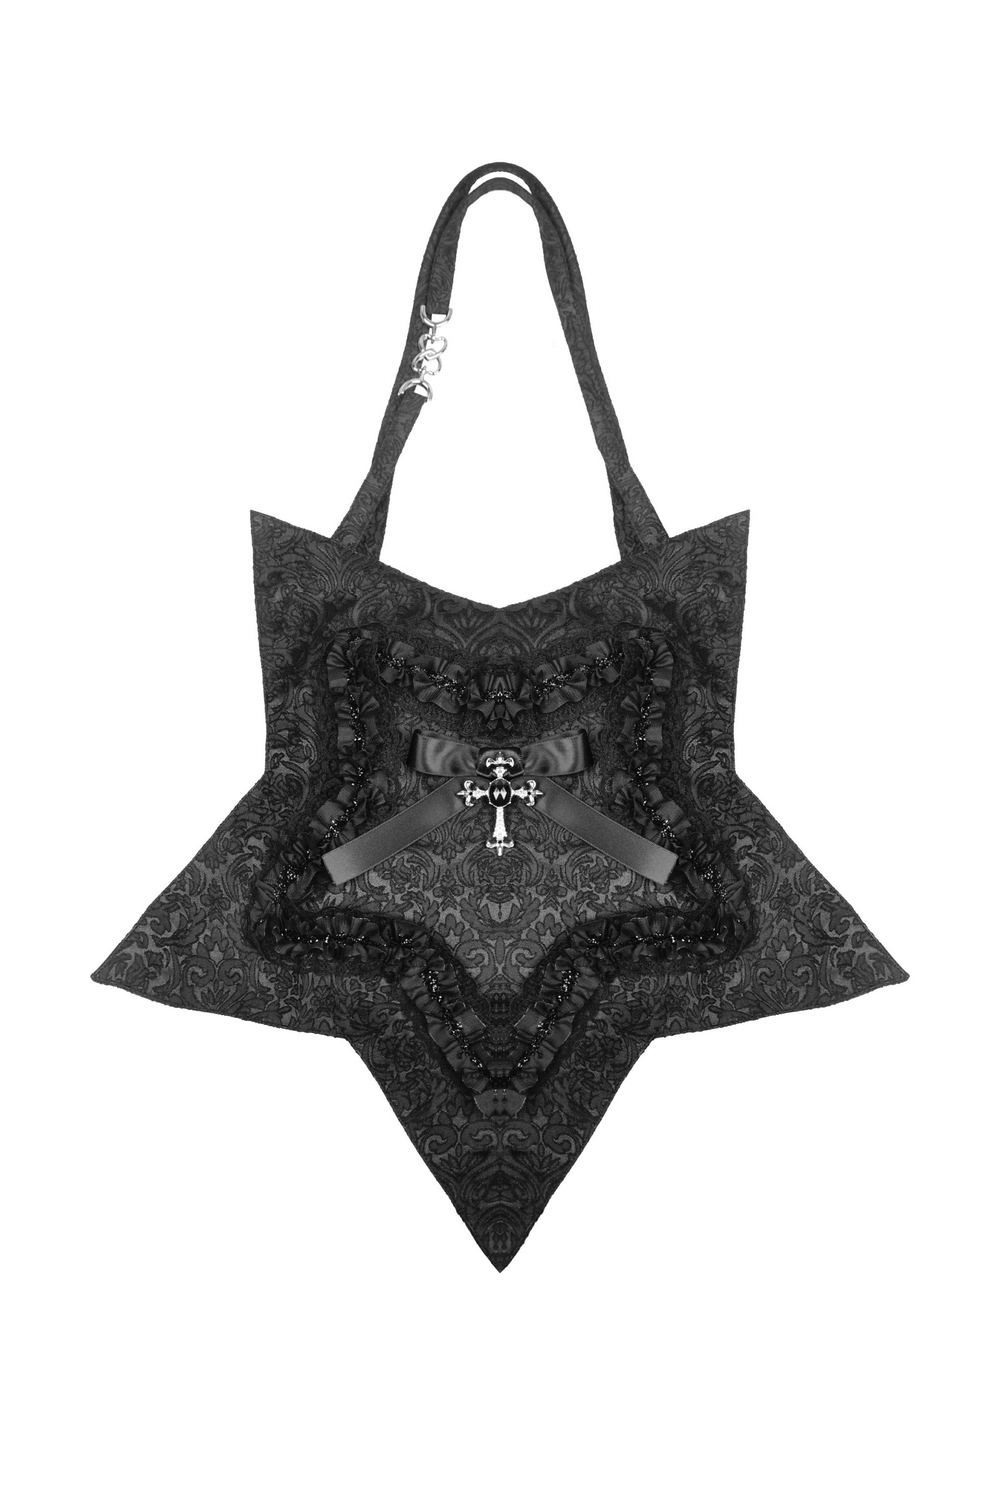 Star-Shaped Black Gothic Bag for Women - Lolita Accessory